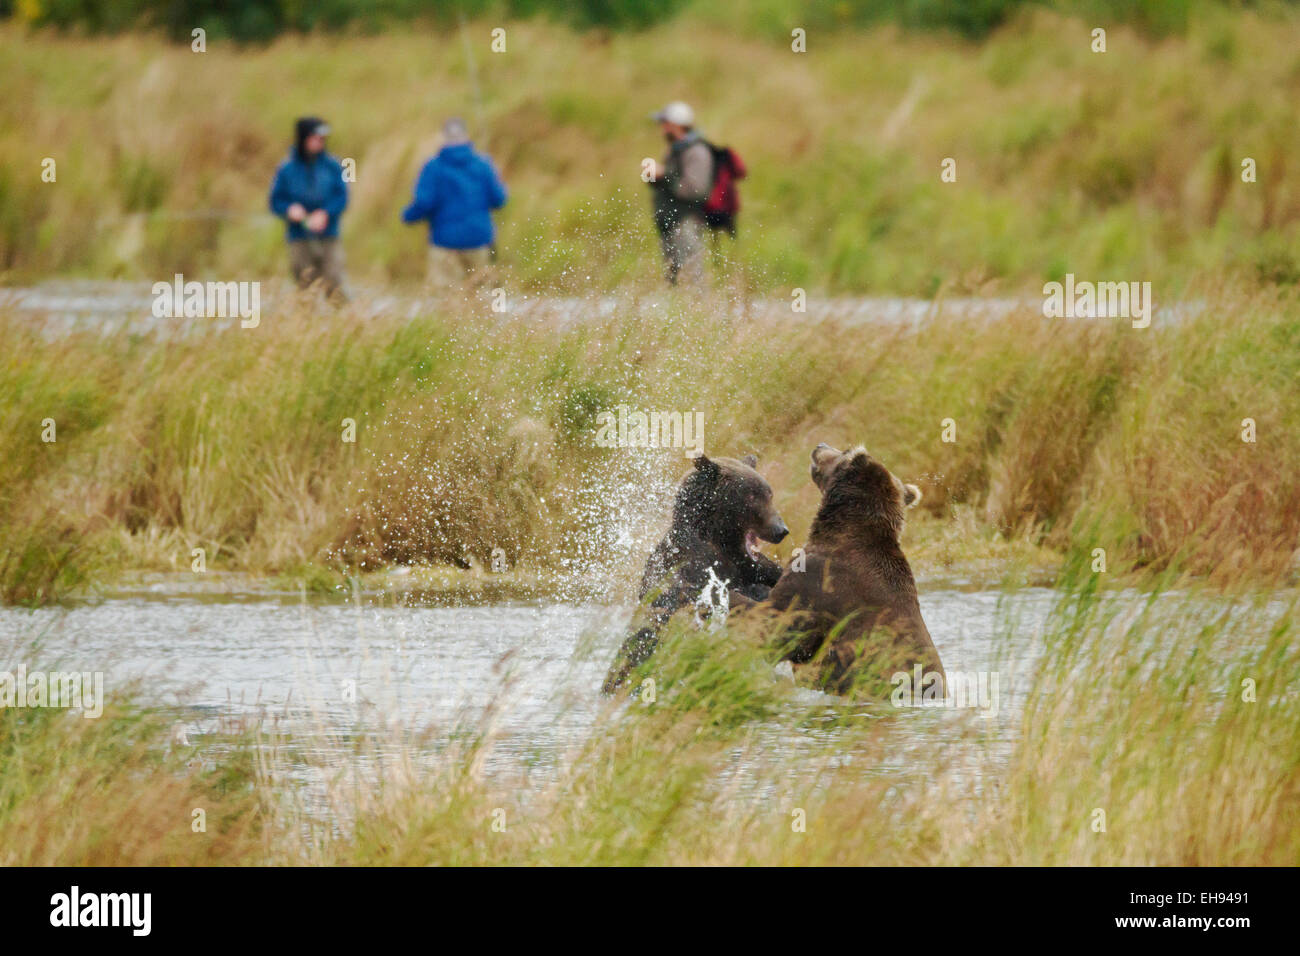 Coastal brown bears (Ursus arctos) fighting while fishermen stand nearby in Katmai National Park, Alaska Stock Photo